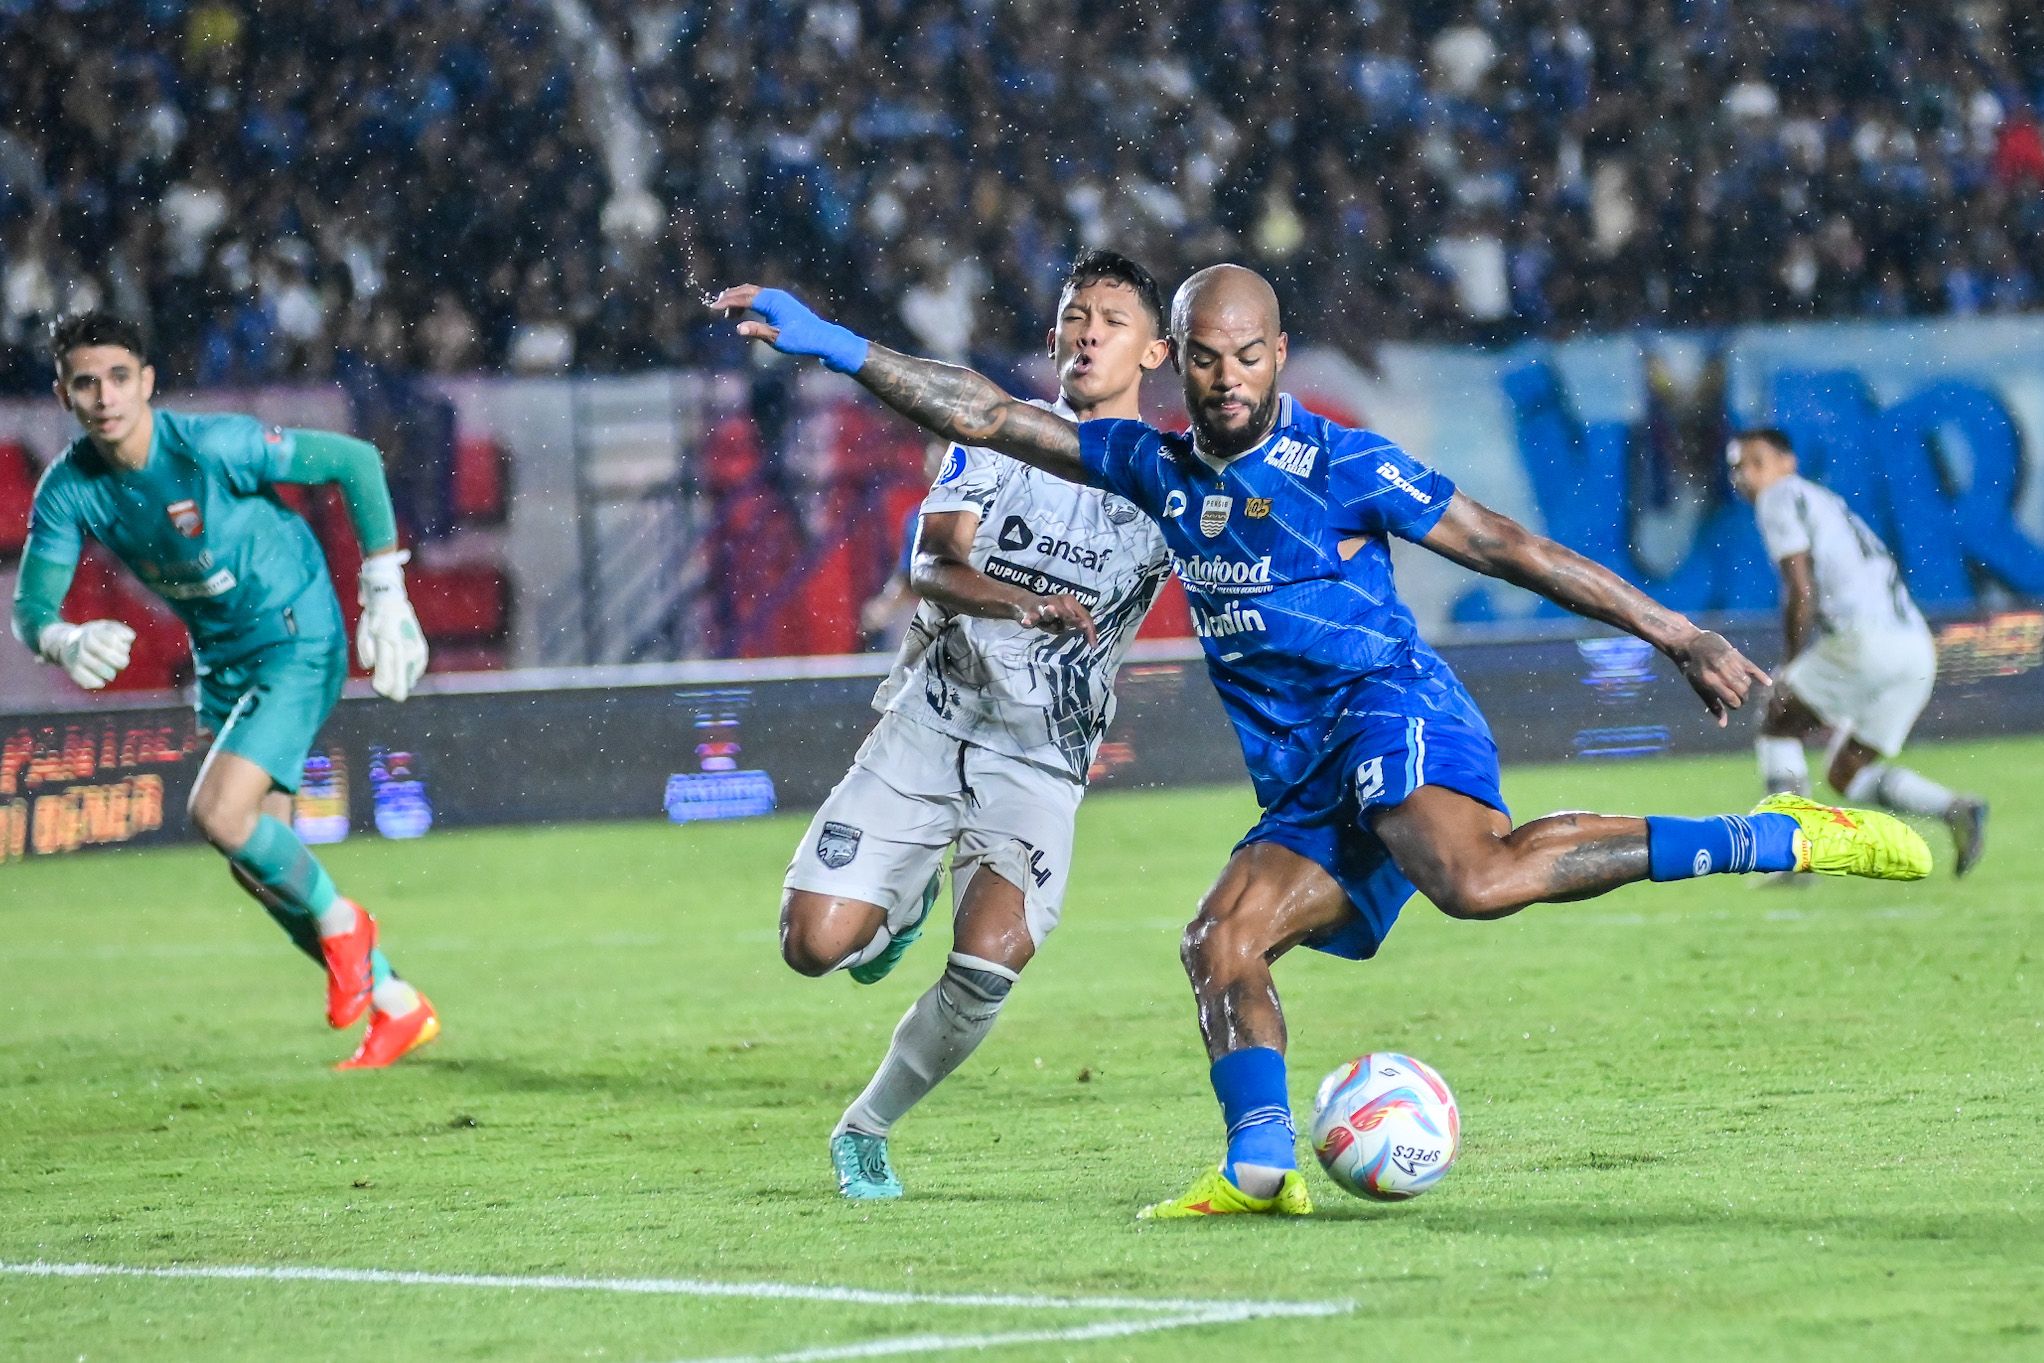 Hasil Persib Vs Borneo FC, Catatan Hodak Usai Jungkalkan Juara Reguler Series